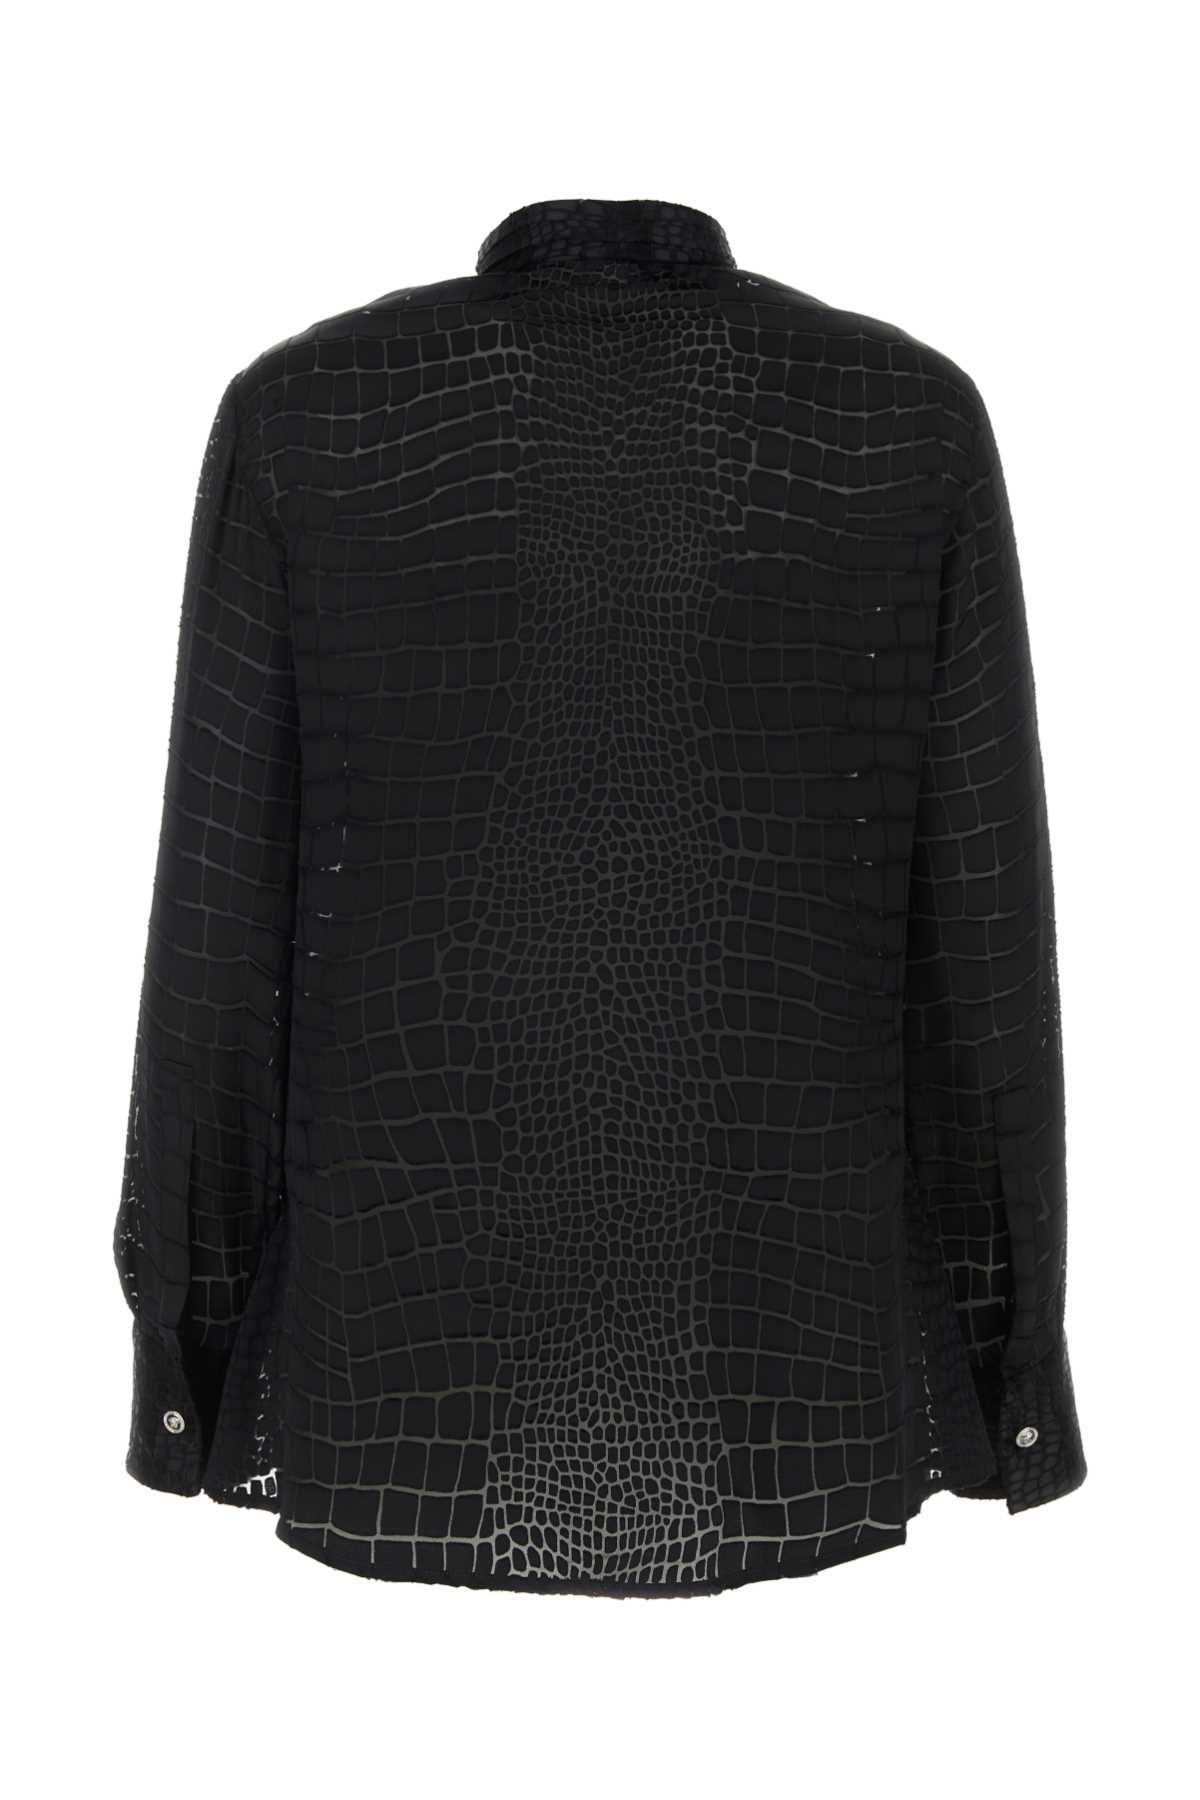 Versace Black Viscose Blend Lavallã¨re Devorã© Shirt In 1b000